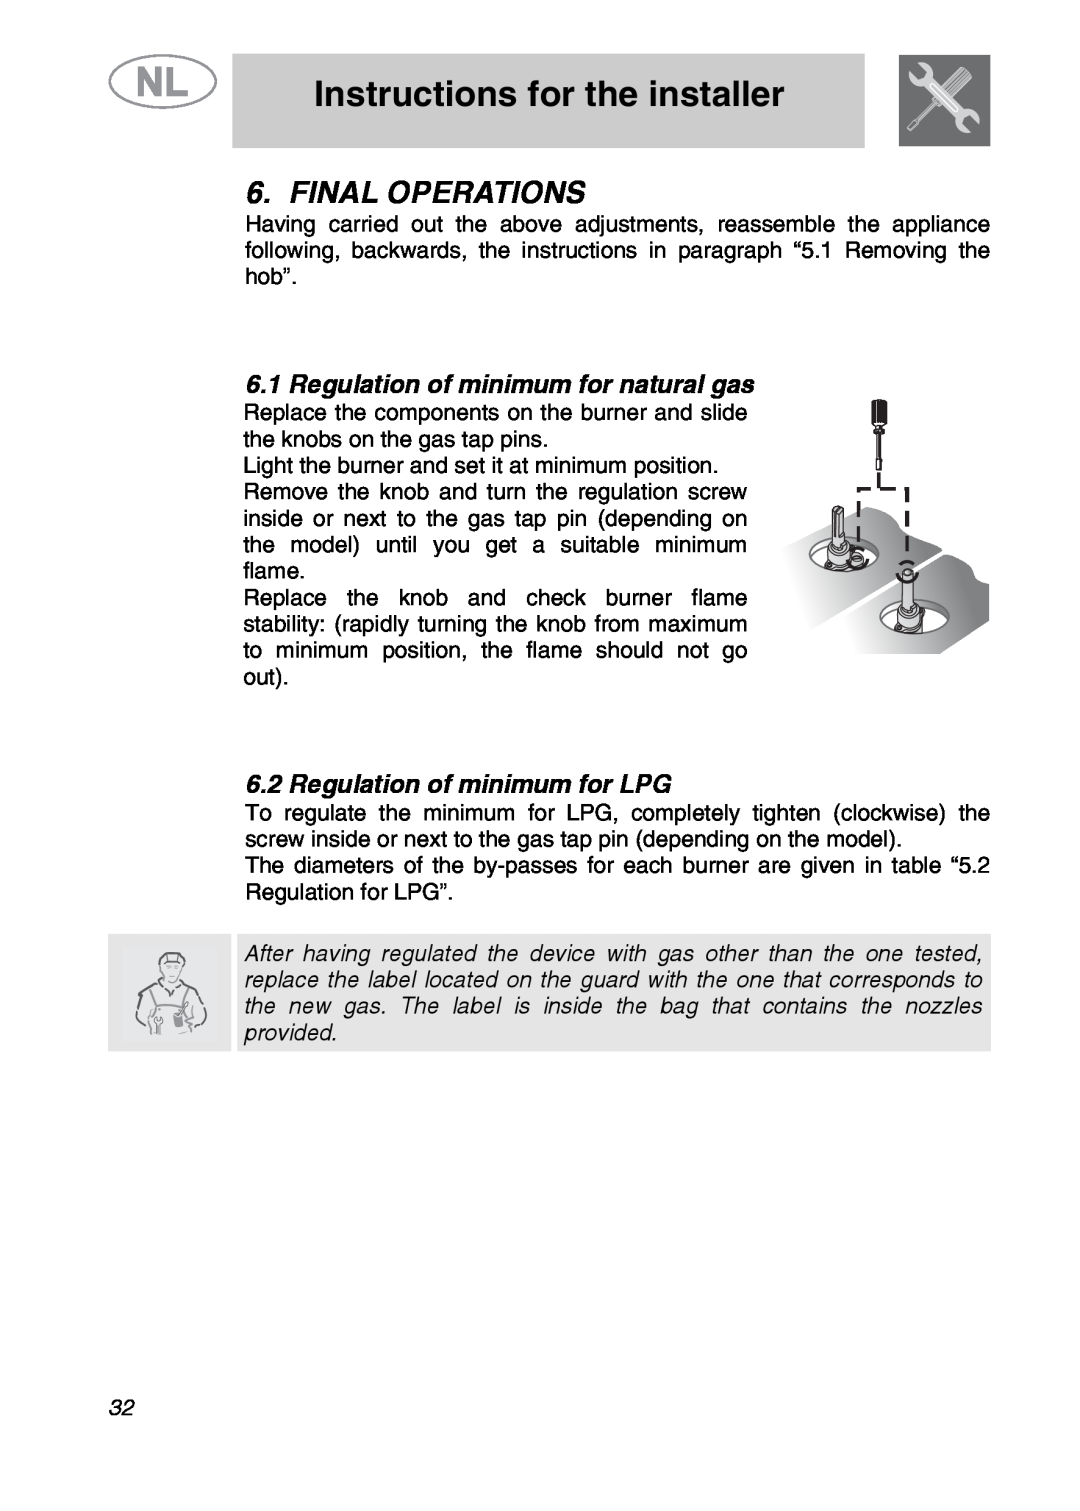 Smeg GKC641-3 manual Final Operations, Regulation of minimum for natural gas, Regulation of minimum for LPG 